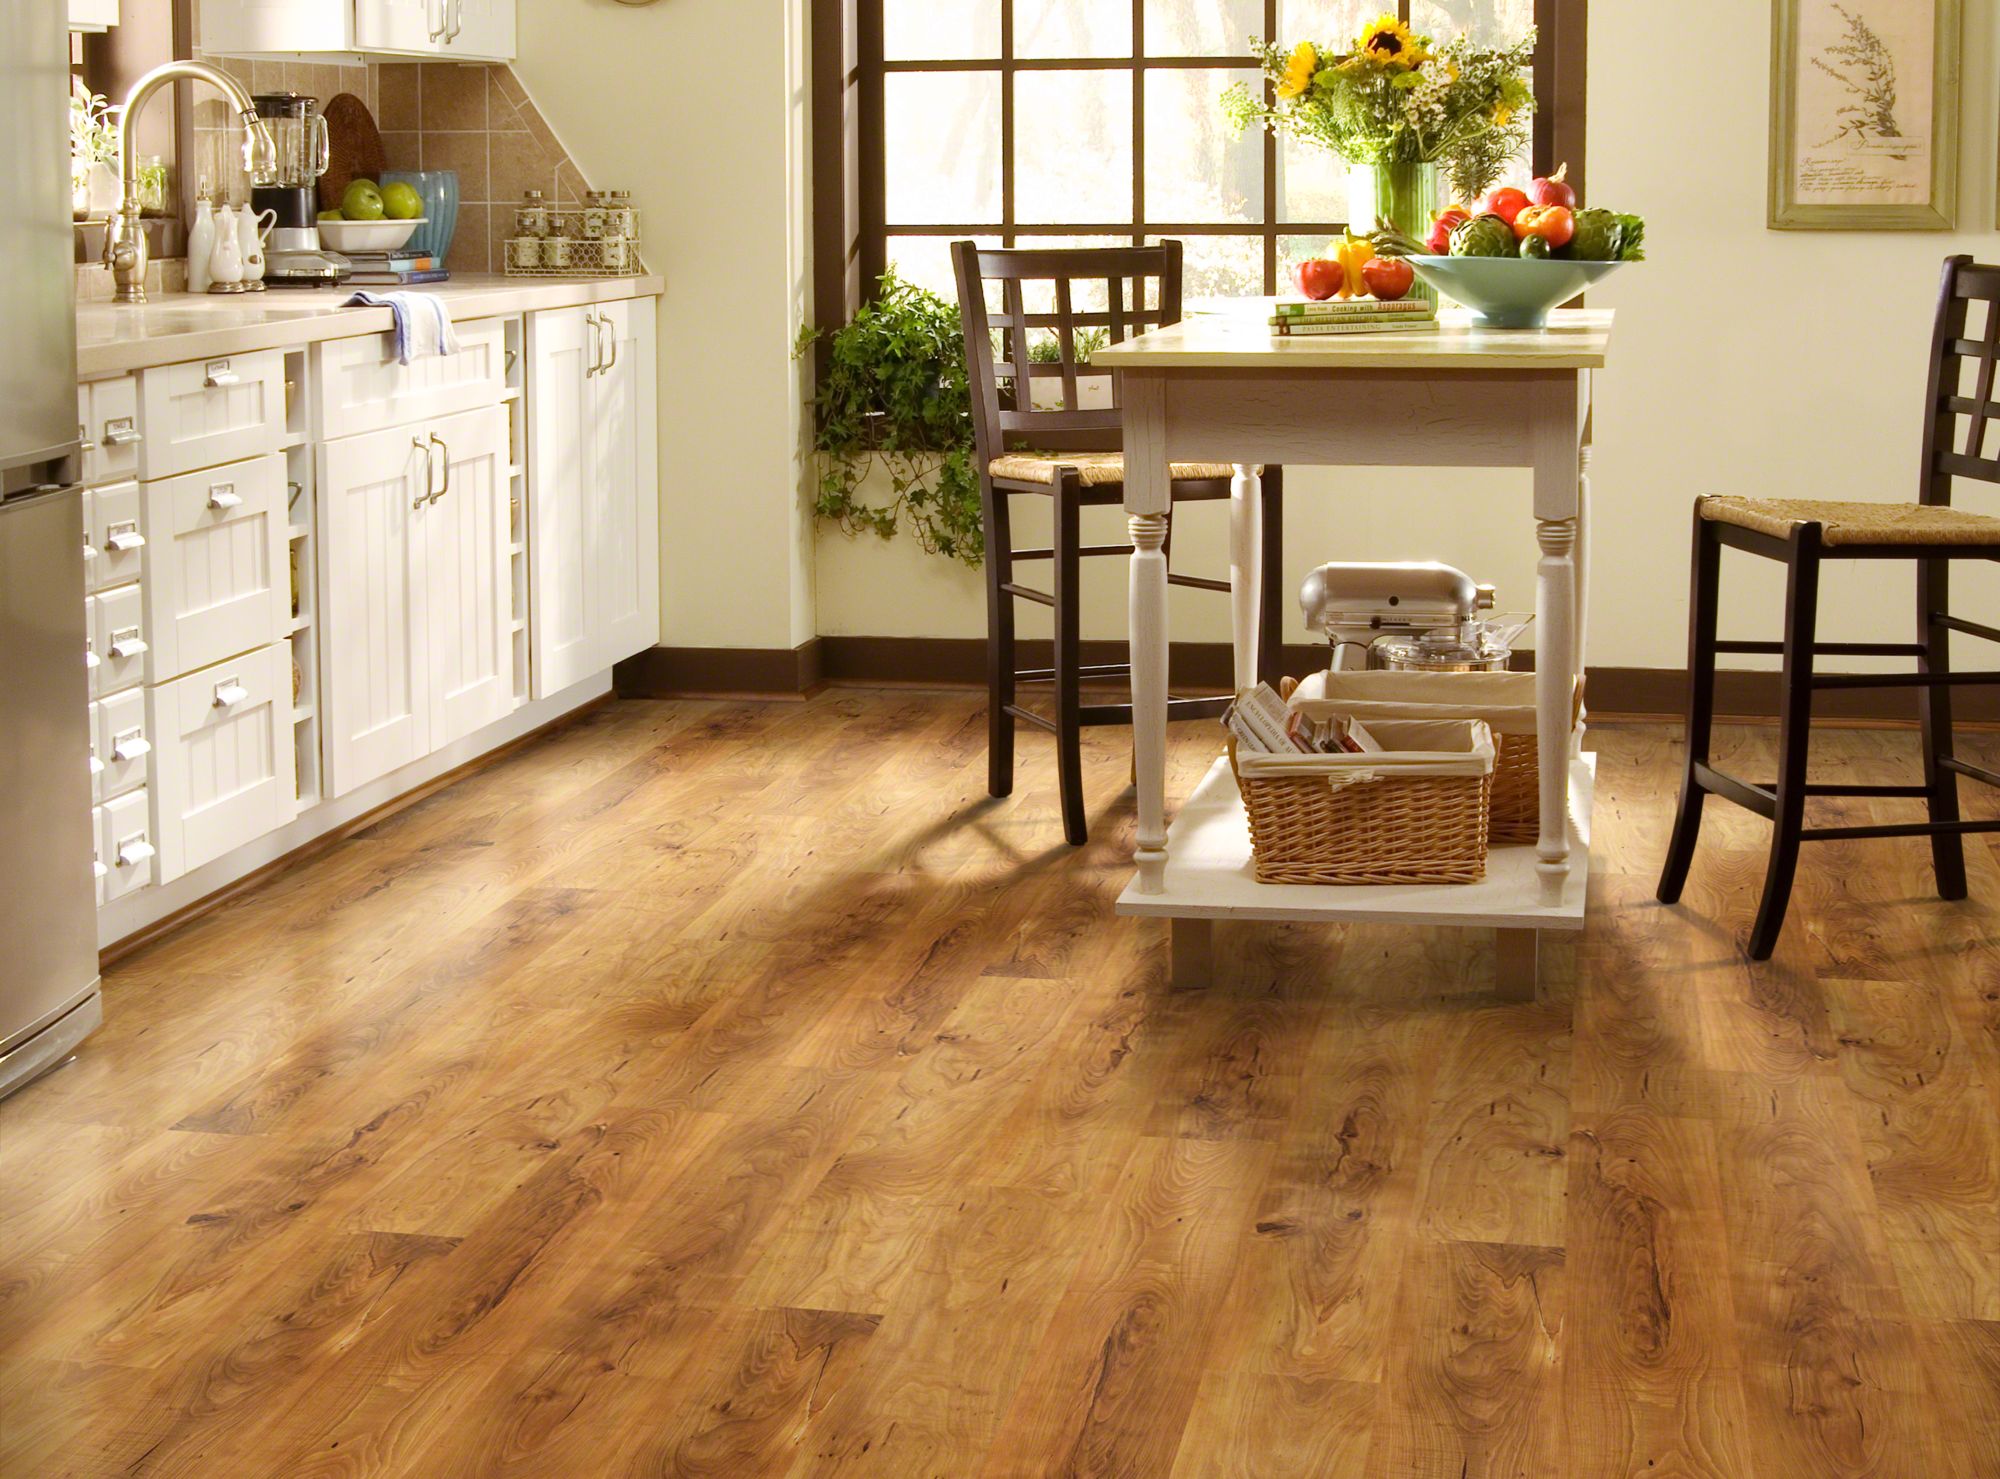 Wooden beauty: laminate floors